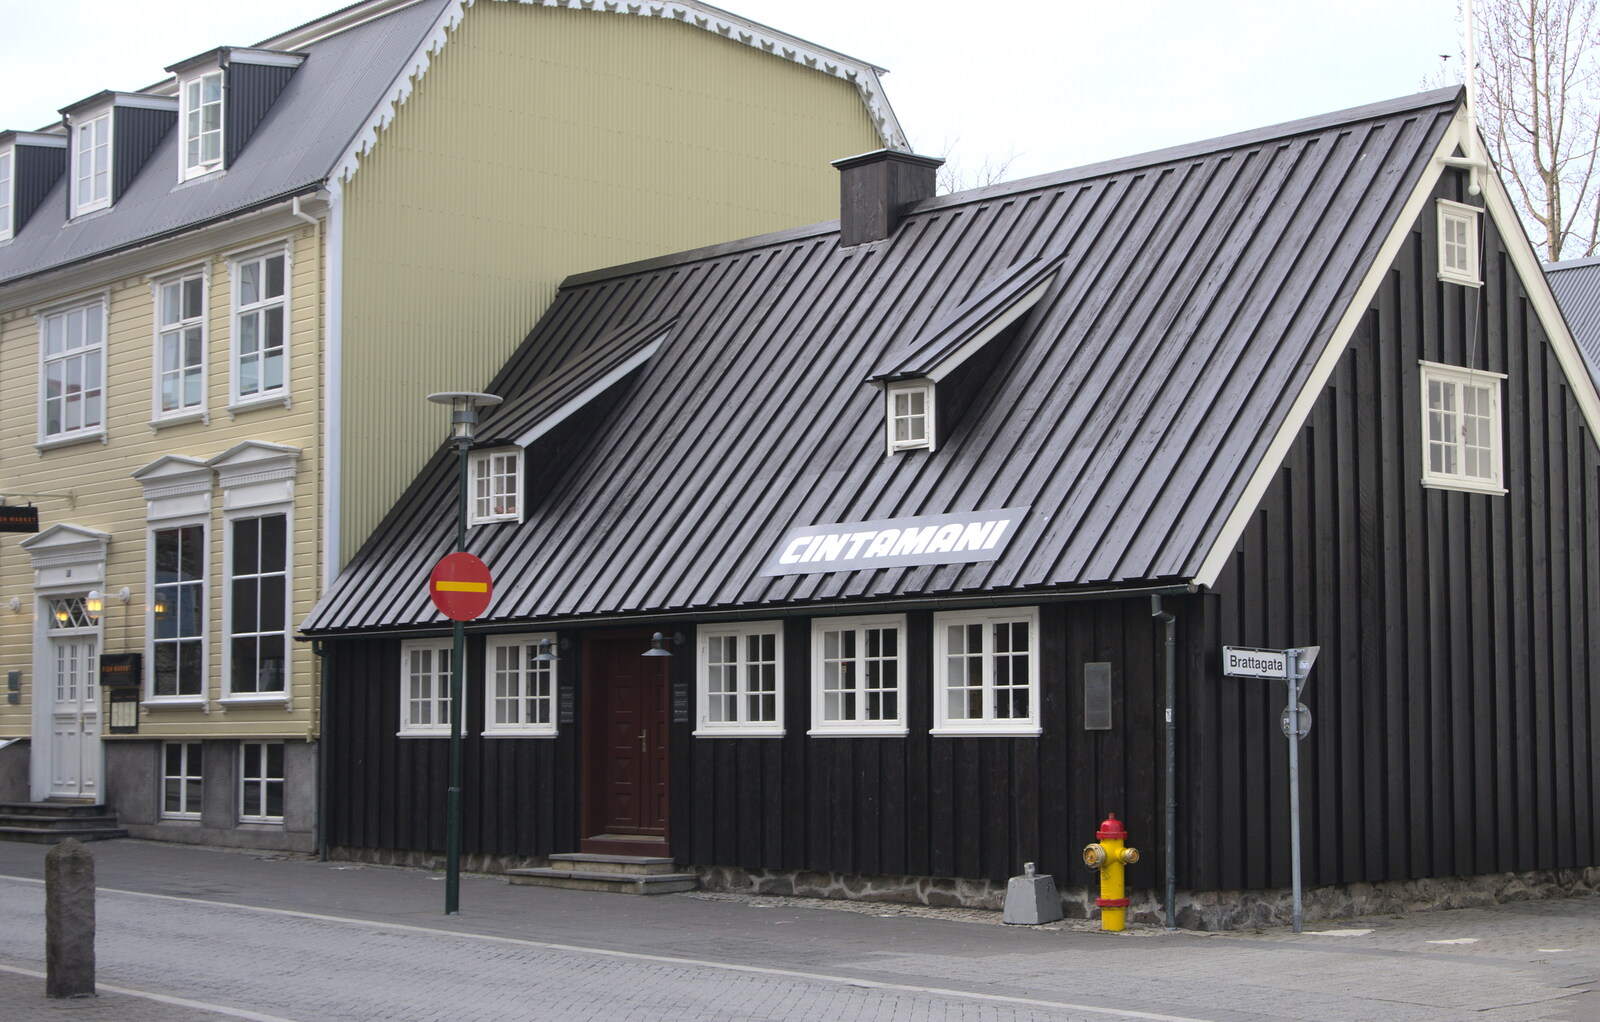 Reykjavík's oldest extant building from Hallgrímskirkja Cathedral and Whale Watching, Reykjavik - 21st April 2017